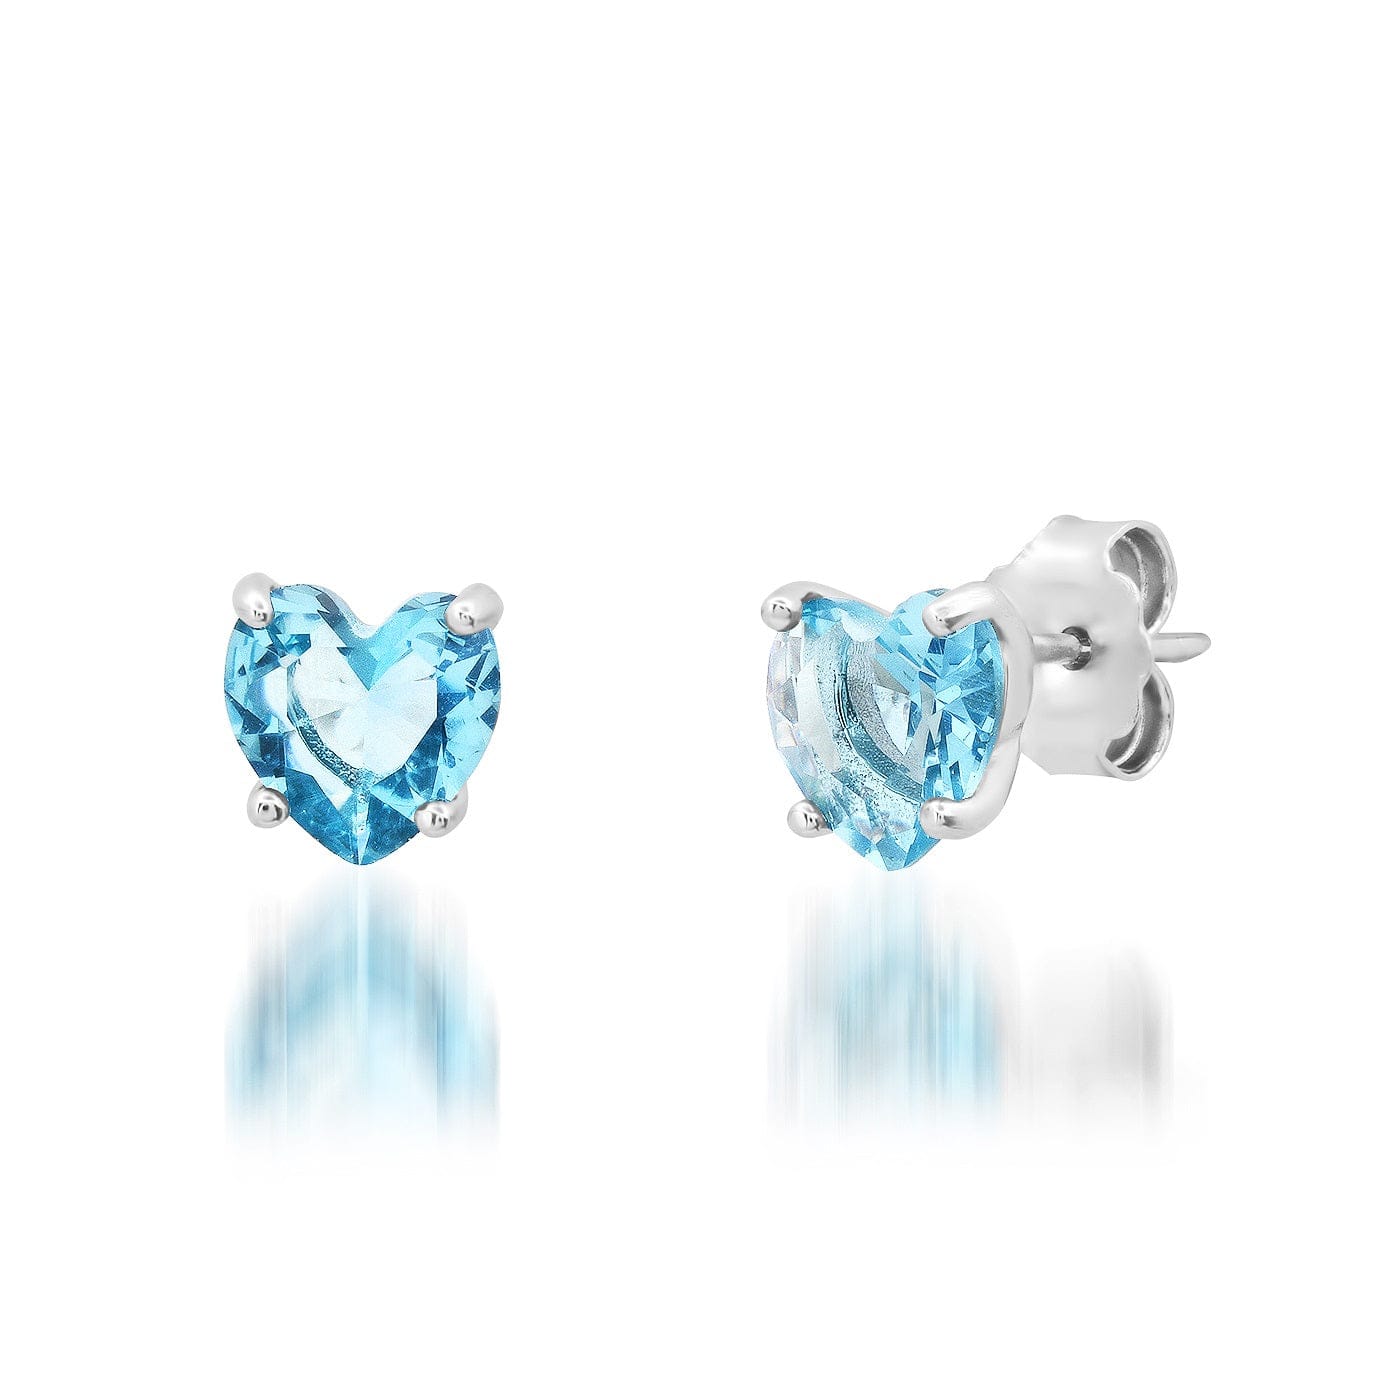 TAI JEWELRY Earrings Aqua Glass Heart Studs